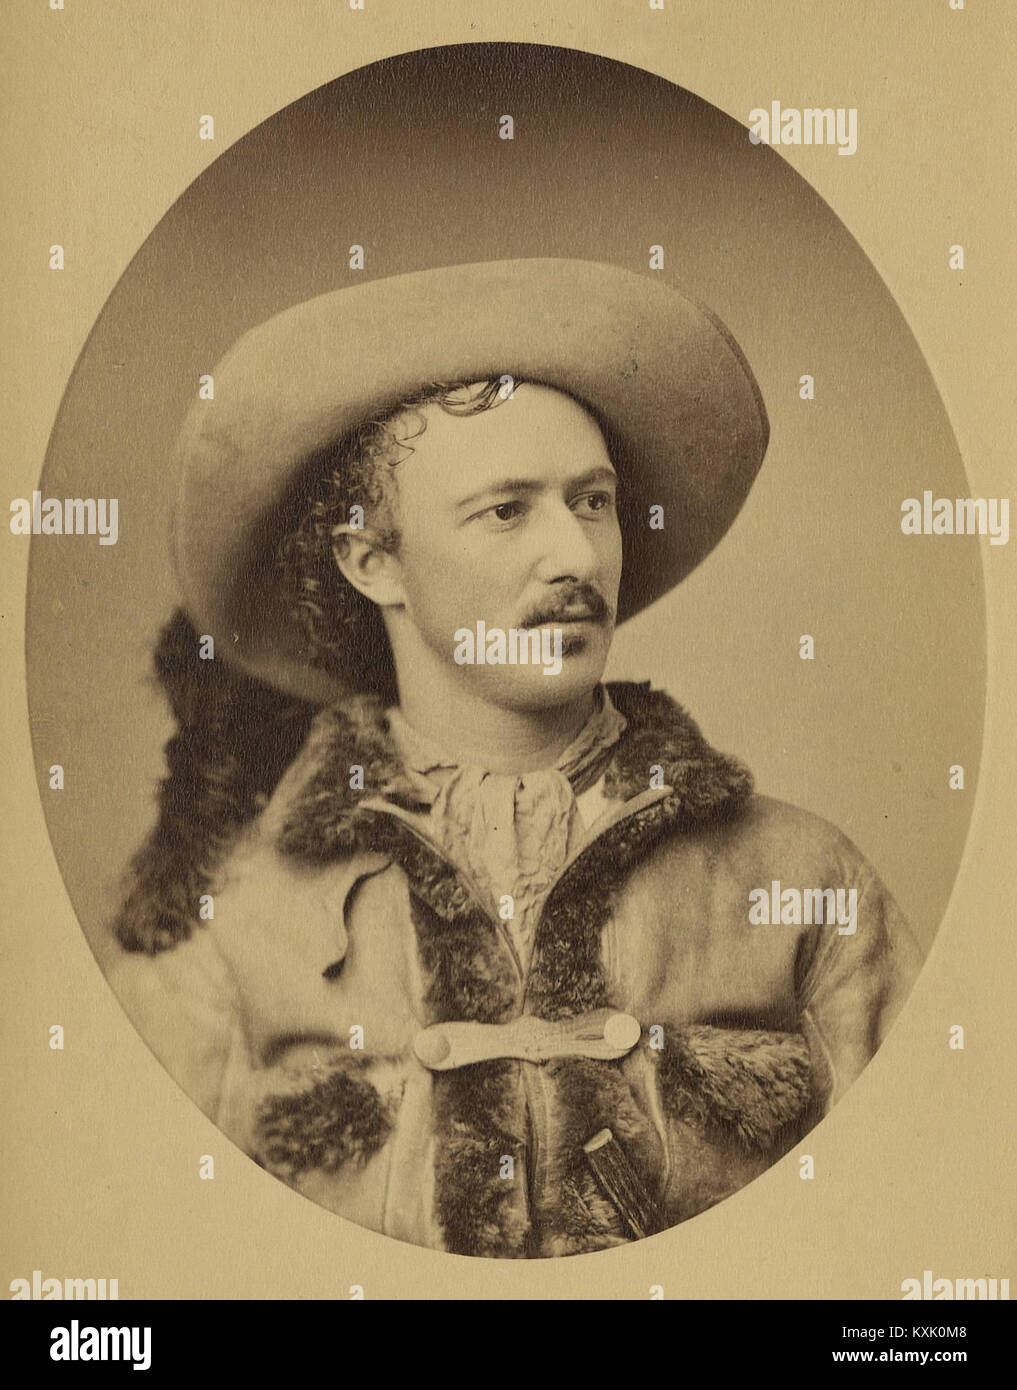 Texas Jack Omohundro, famoso Frontier Scout, cowboy, attore & Corriere confederato durante la guerra civile Foto Stock